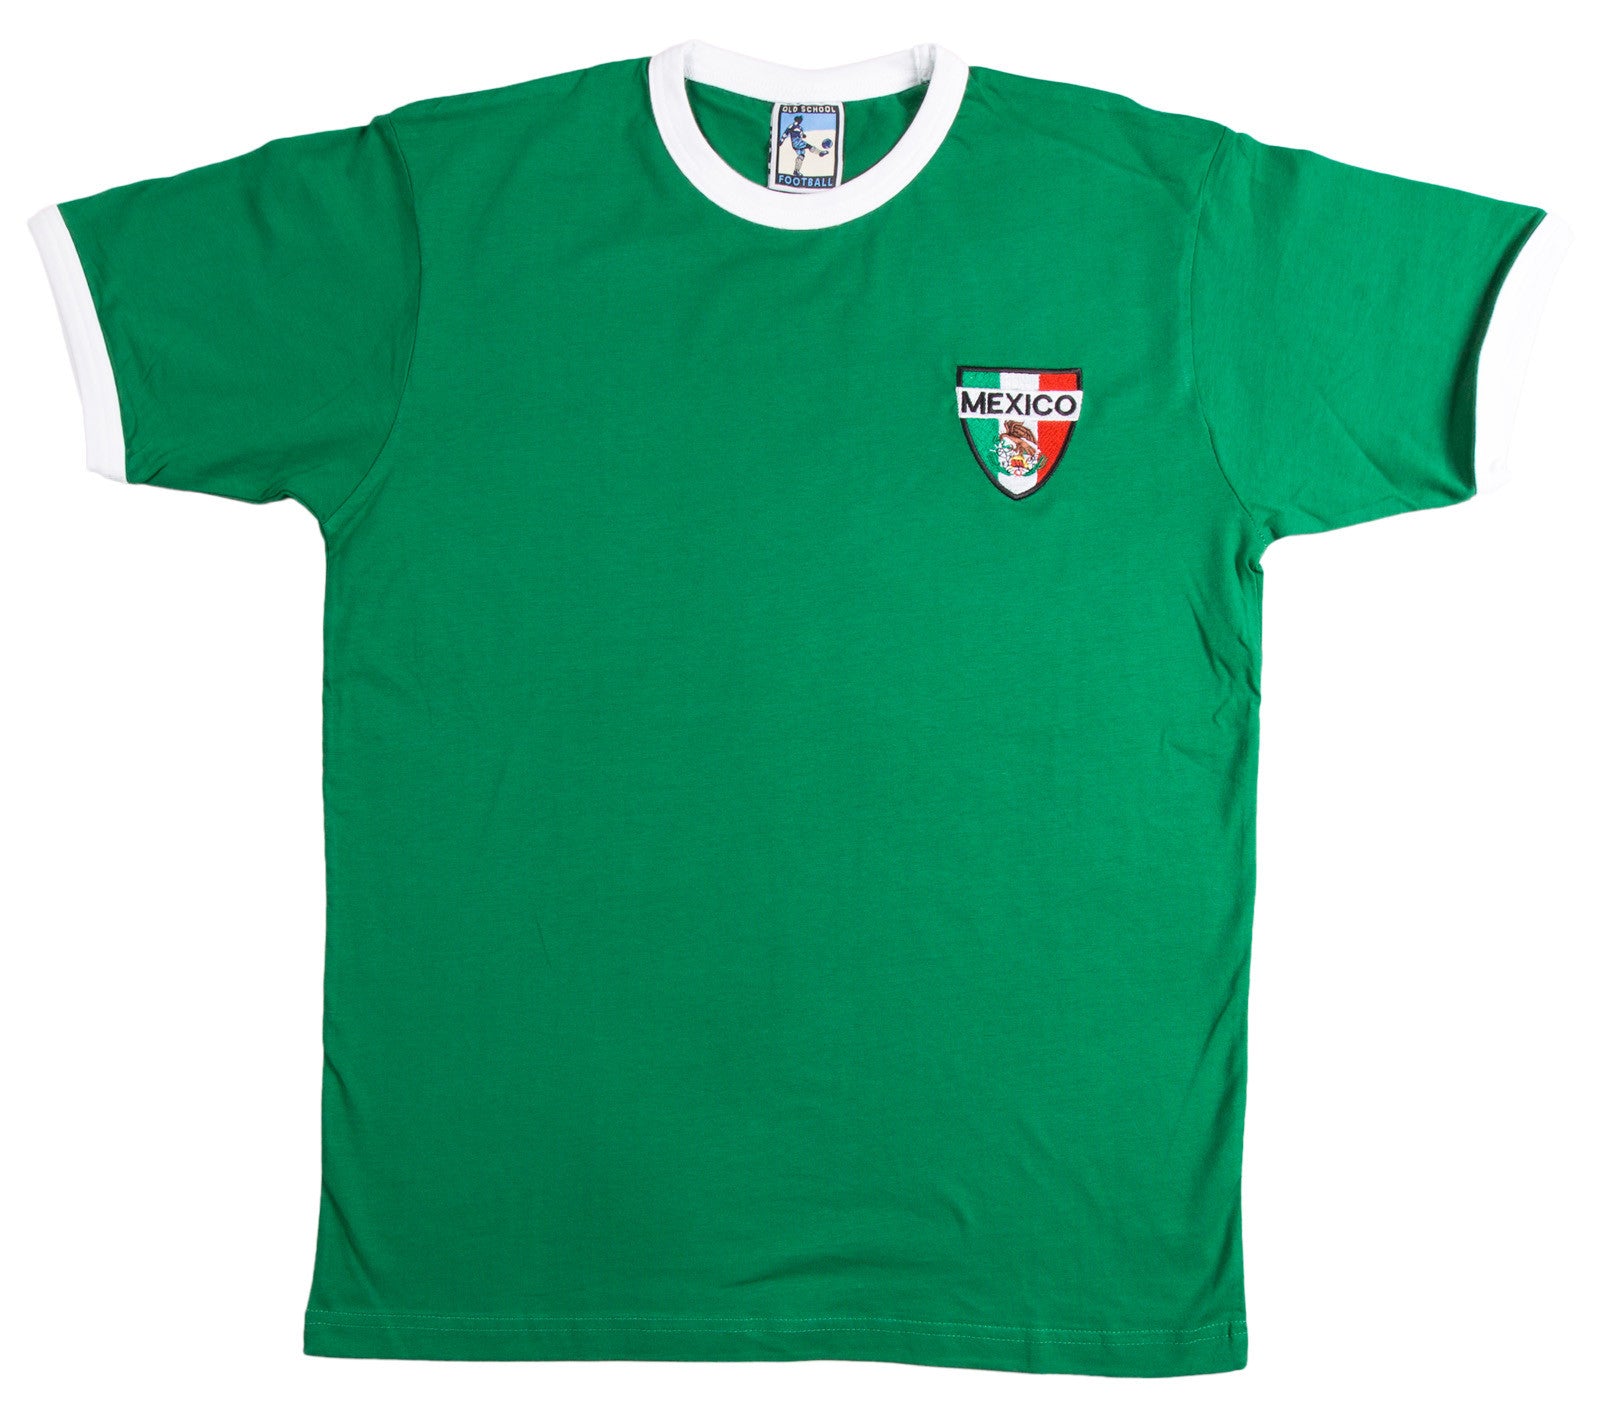 Mexico Retro Football T Shirt 1970s - Old School Football